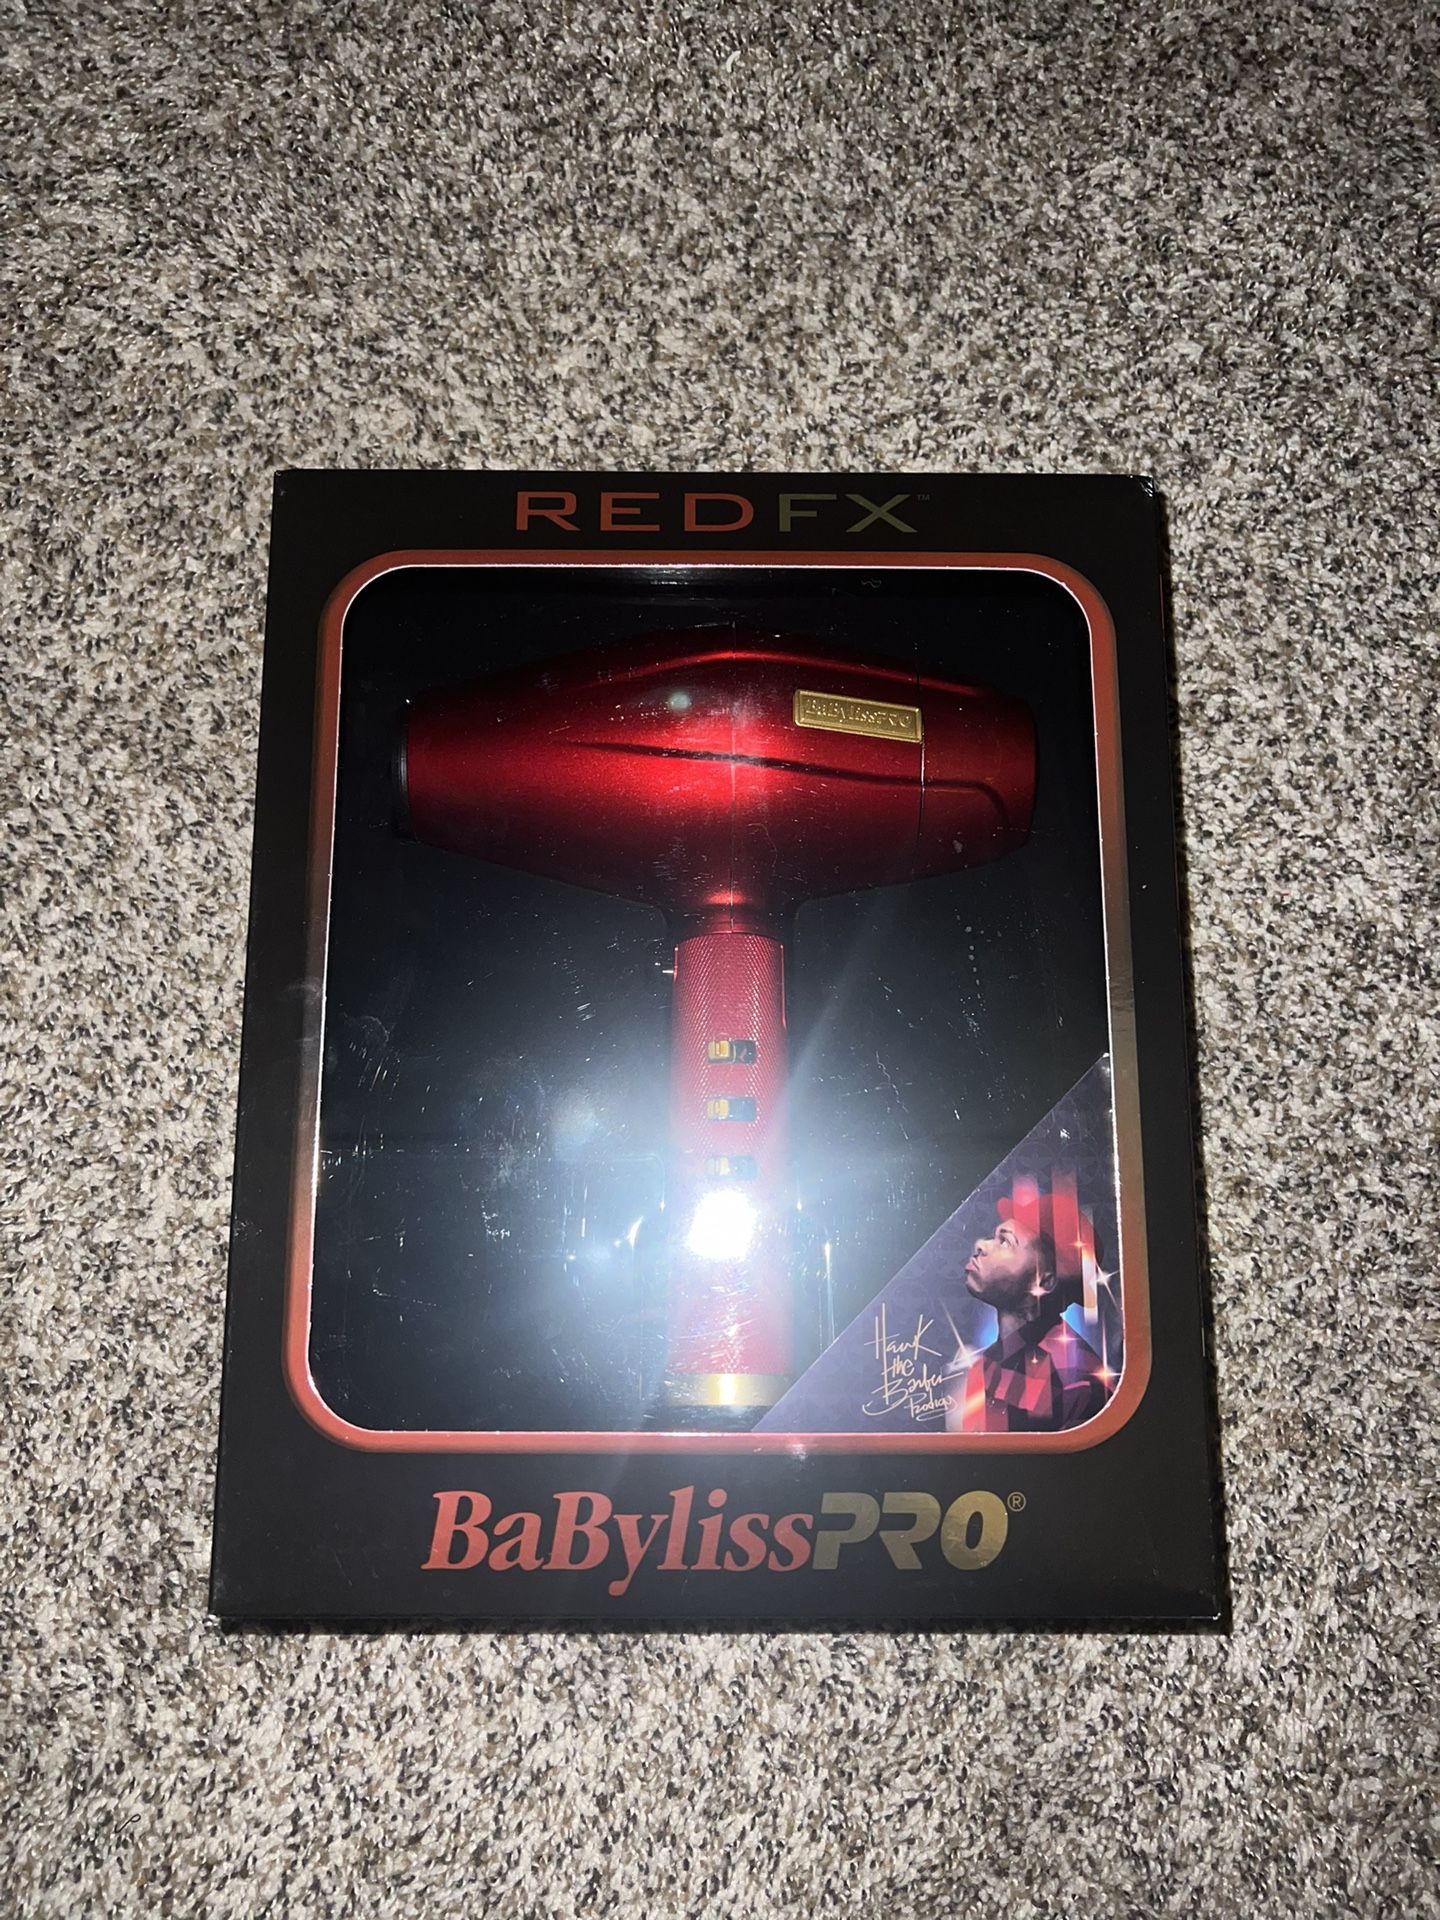 Babyliss Pro RedFX Hairdryer